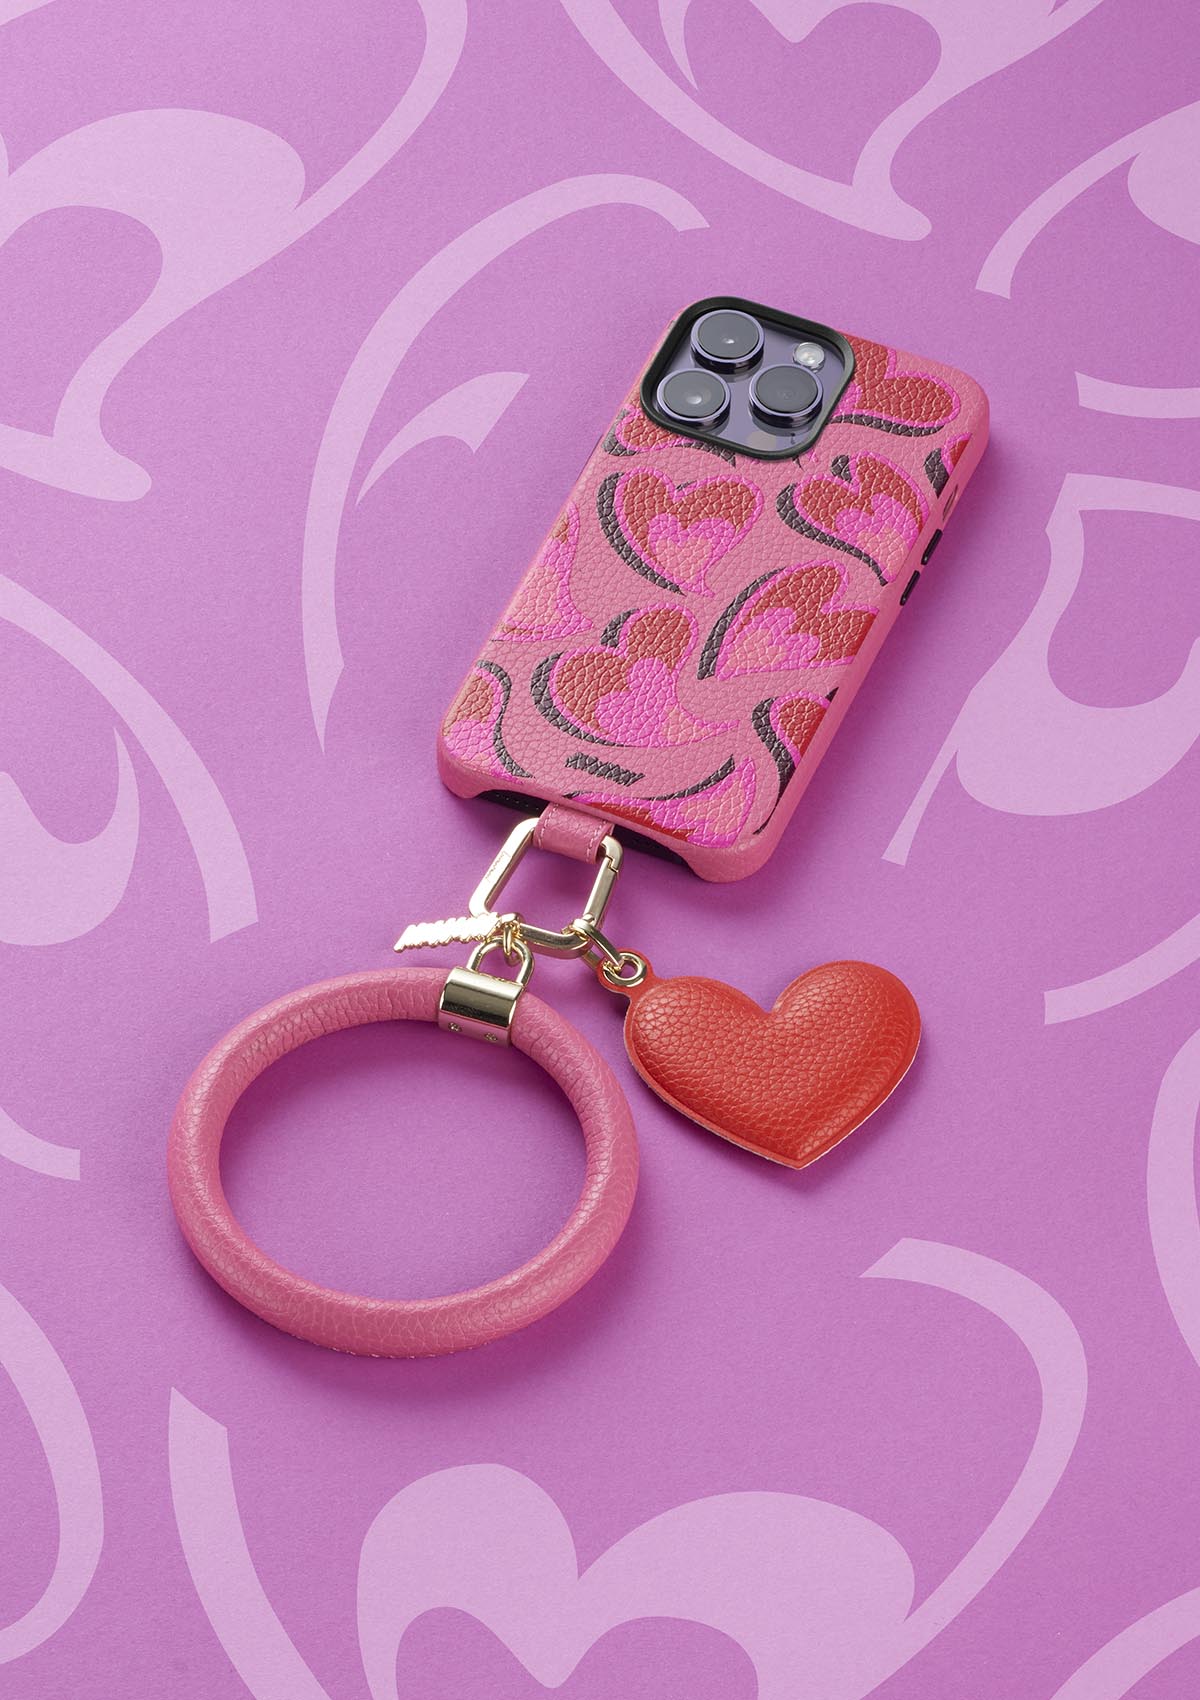 Bracciale Phone Bangle rosa con Phone charm simbolo e cover iPhone Untags